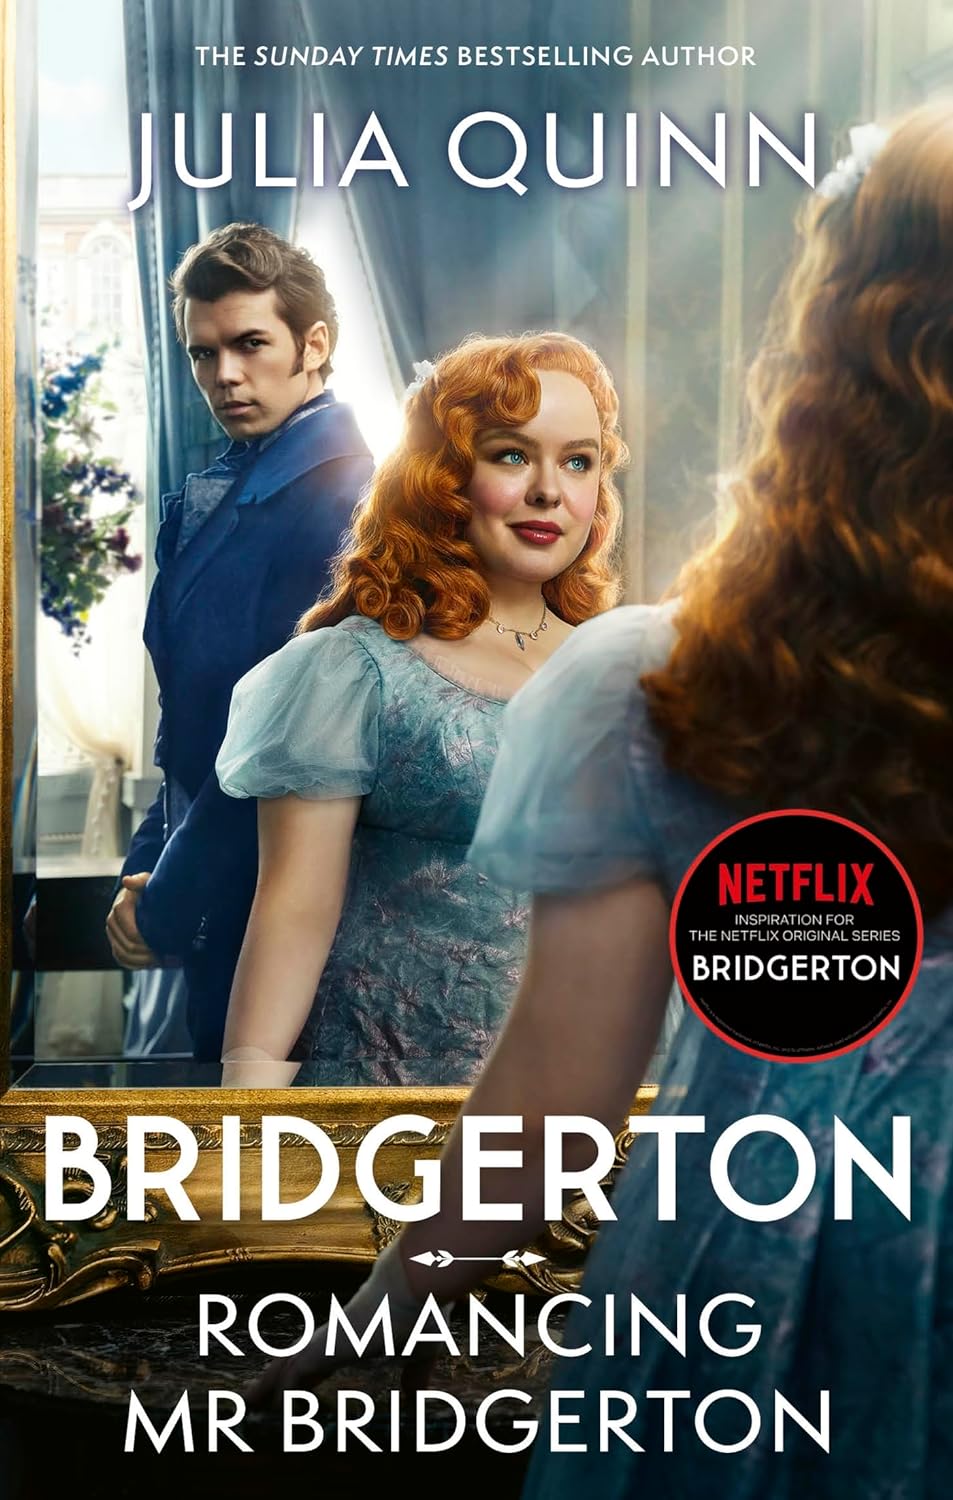 Bridgerton: Romancing Mr Bridgerton (TV Tie-In edition)